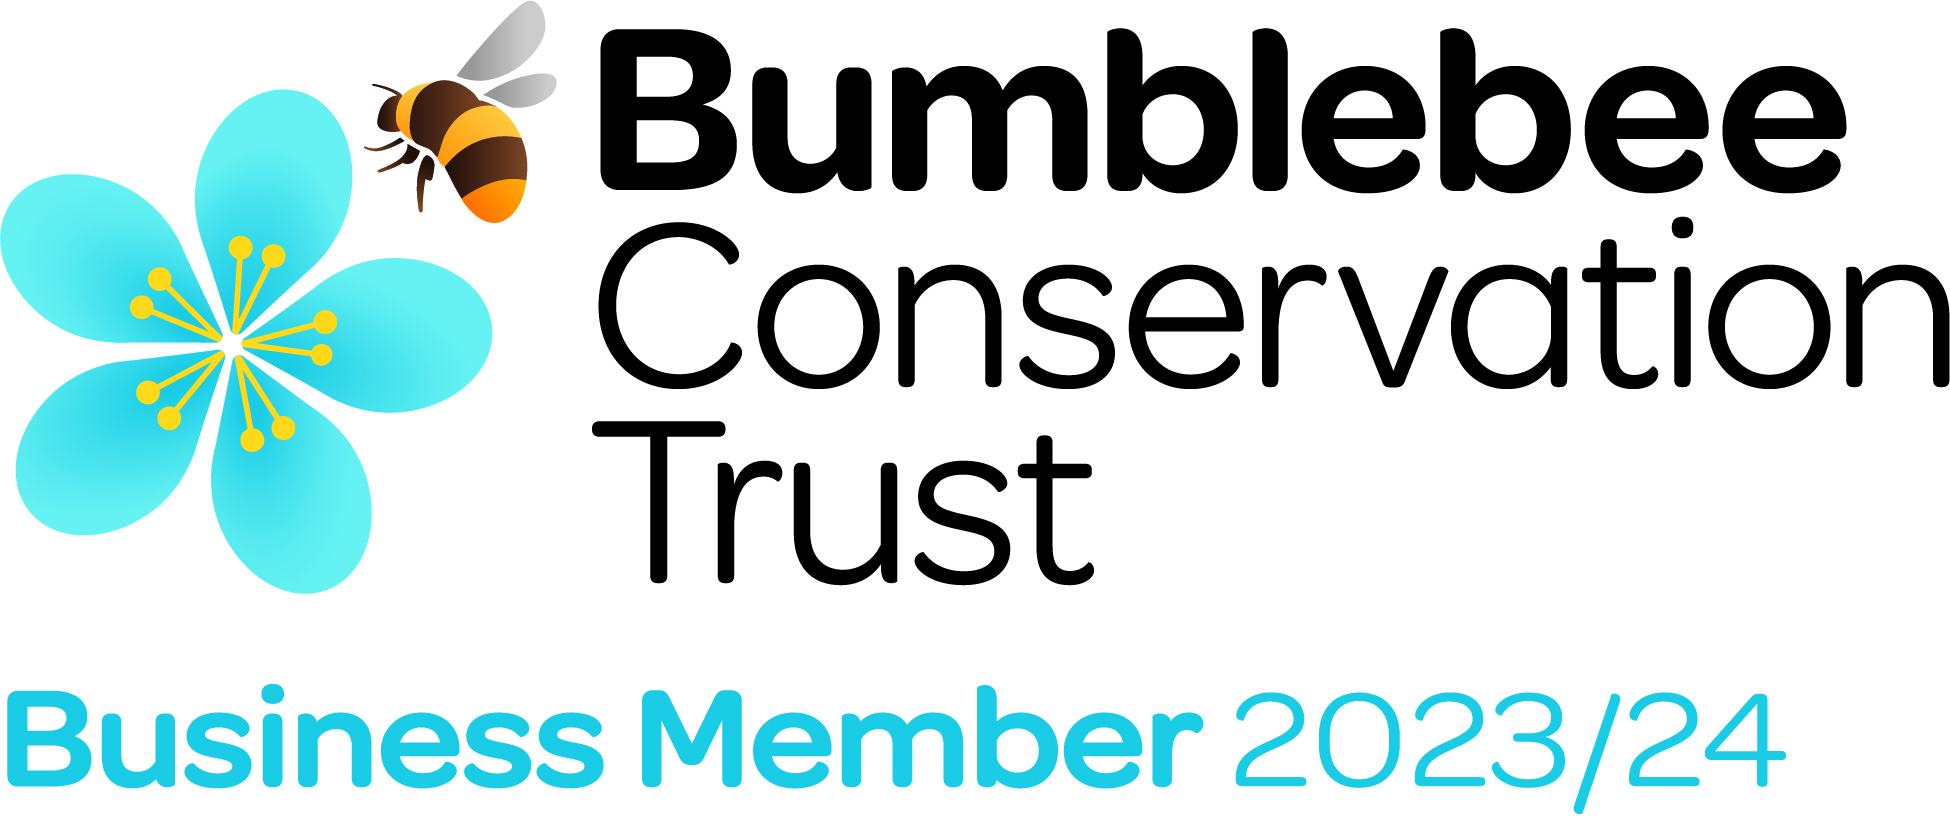 Bumblebee conservation trust